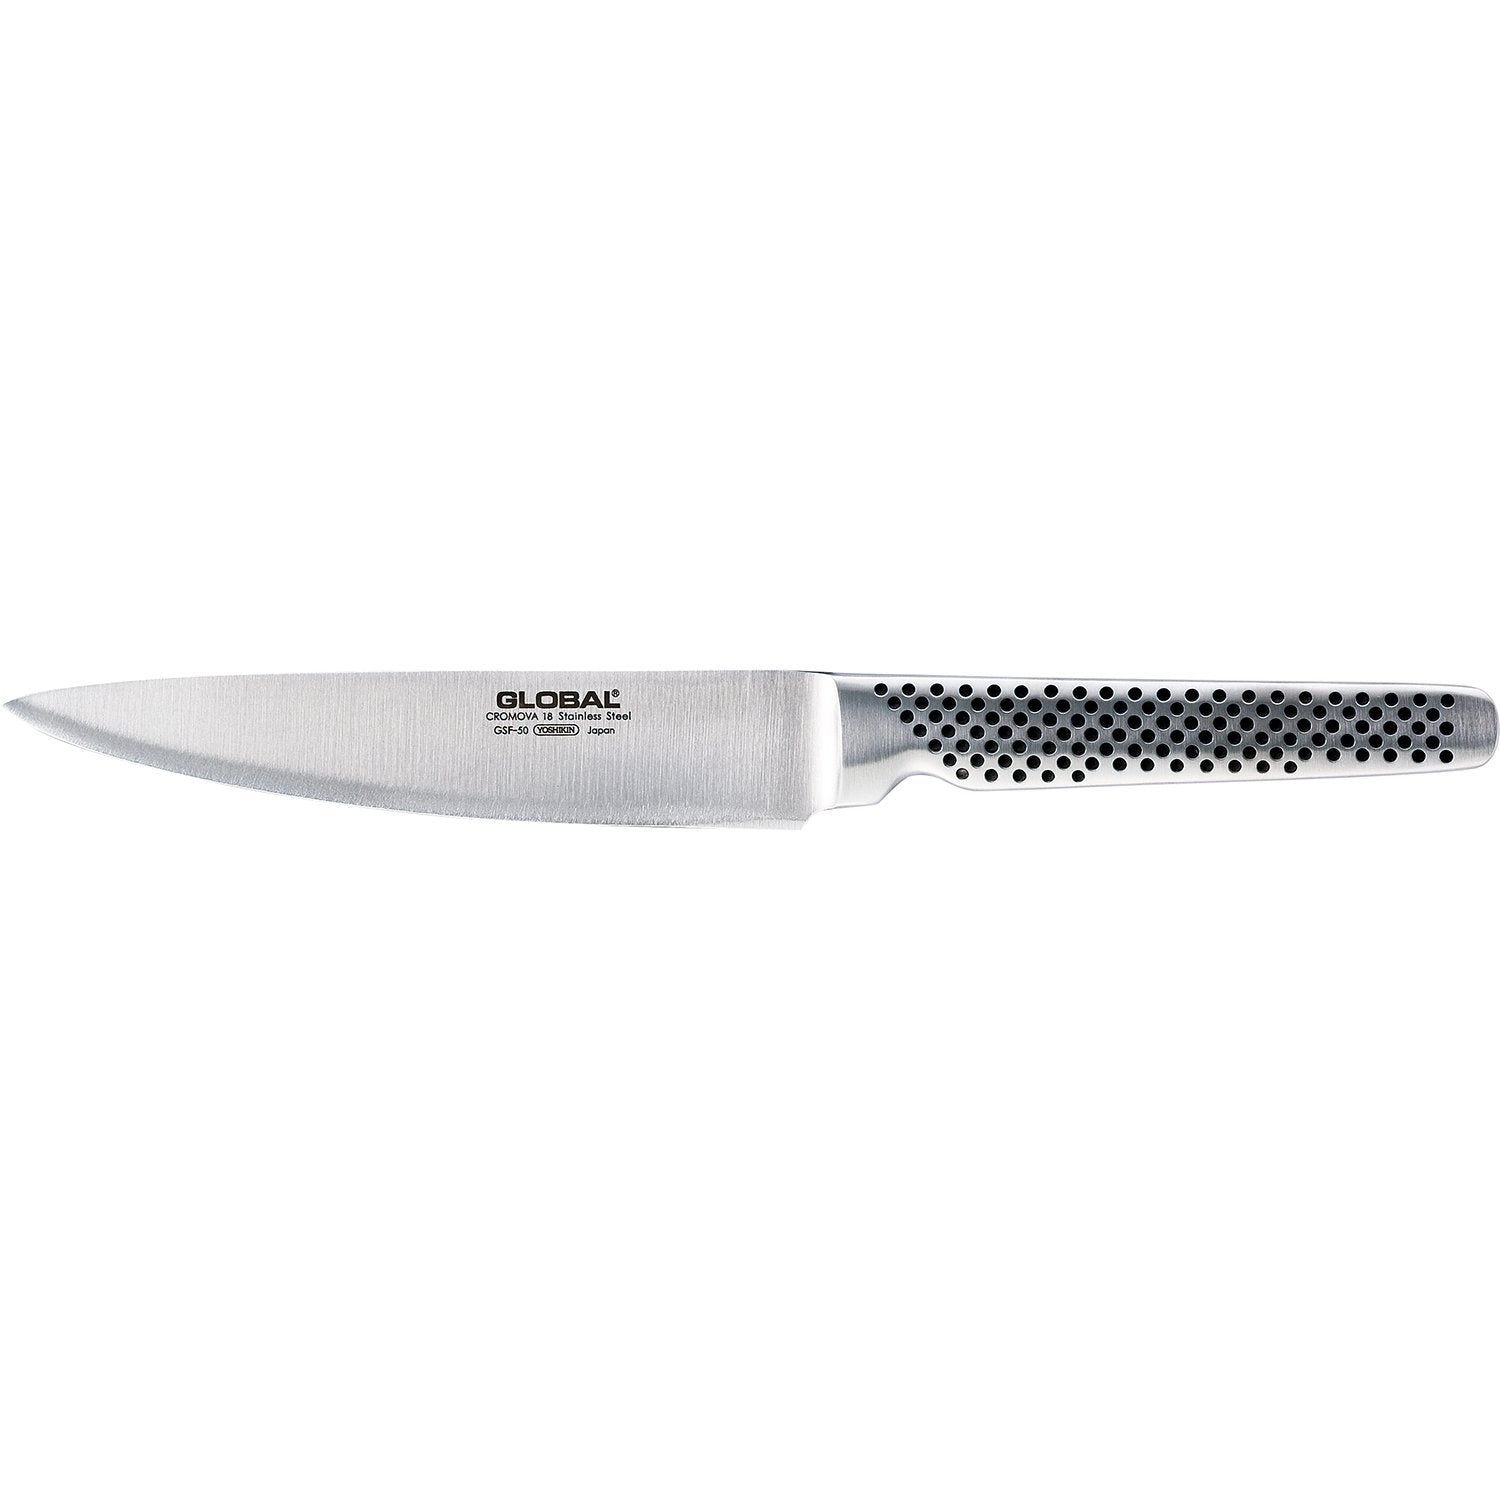 Global Gsf 50 Universal Knife, 15 Cm